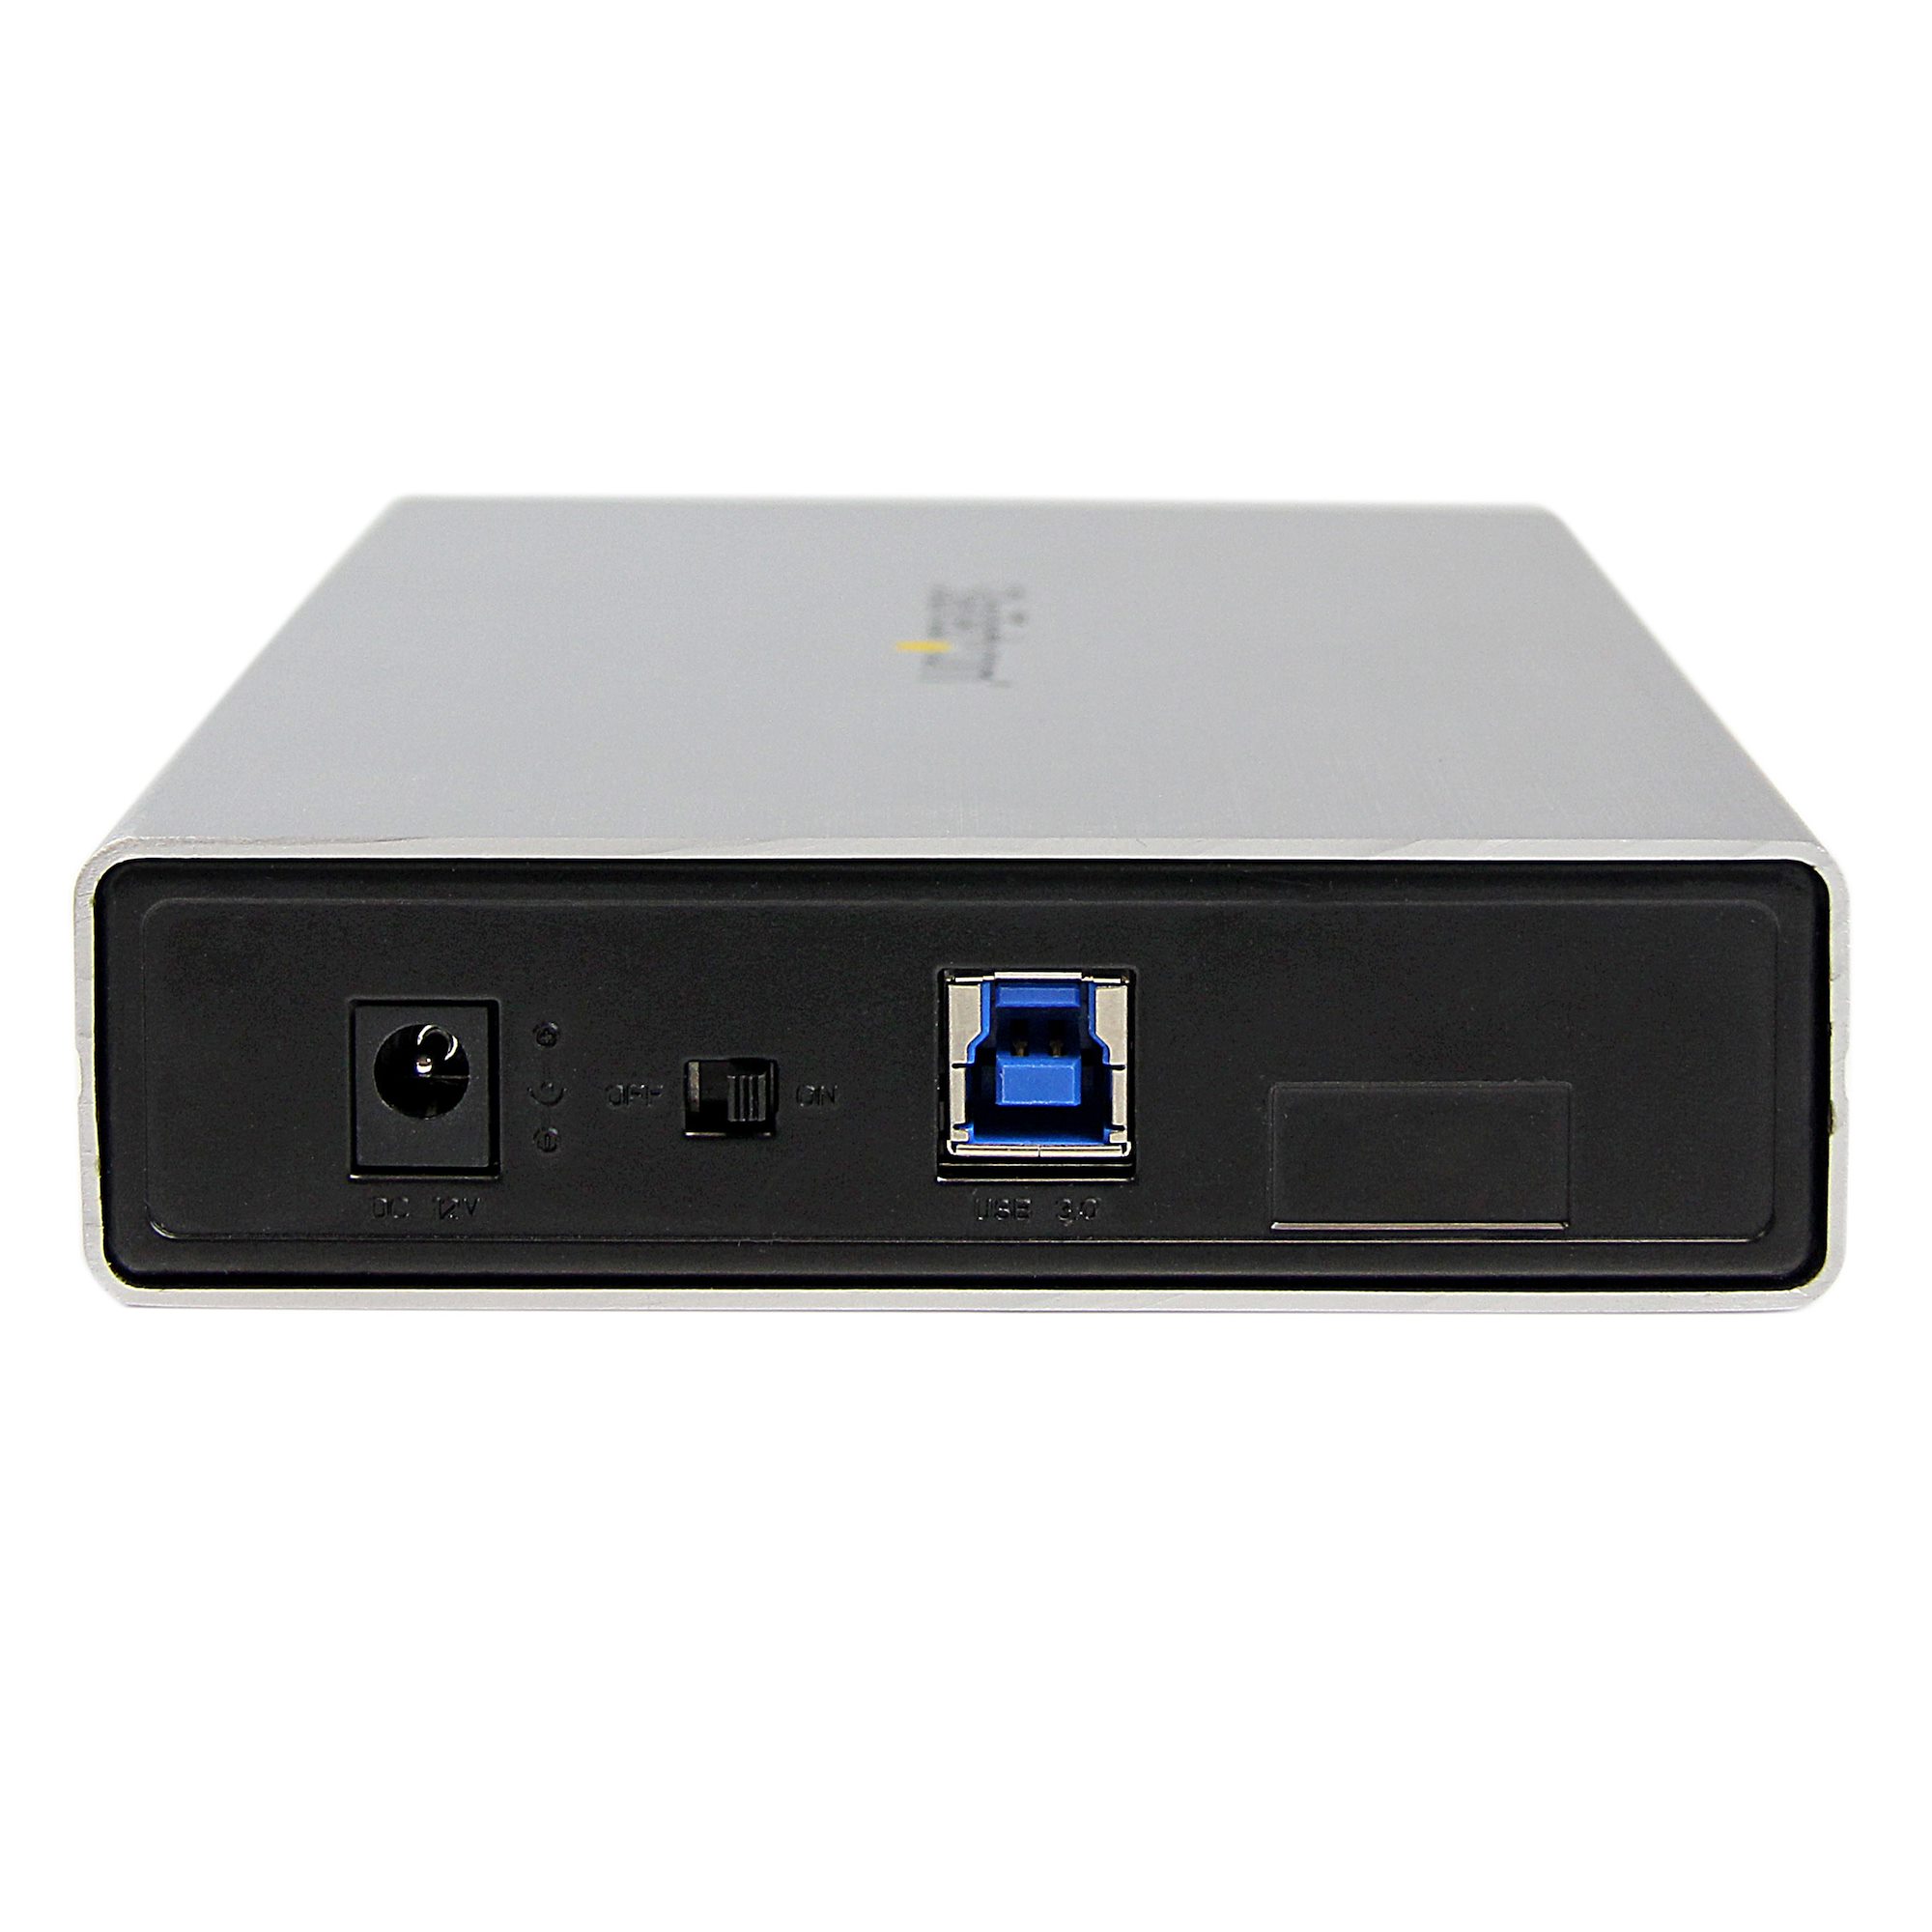 Boitier externe Startech SLSODDU33B USB 3.0 pour lecteur Blu-ray/DVD S-ATA  en format slim à prix bas